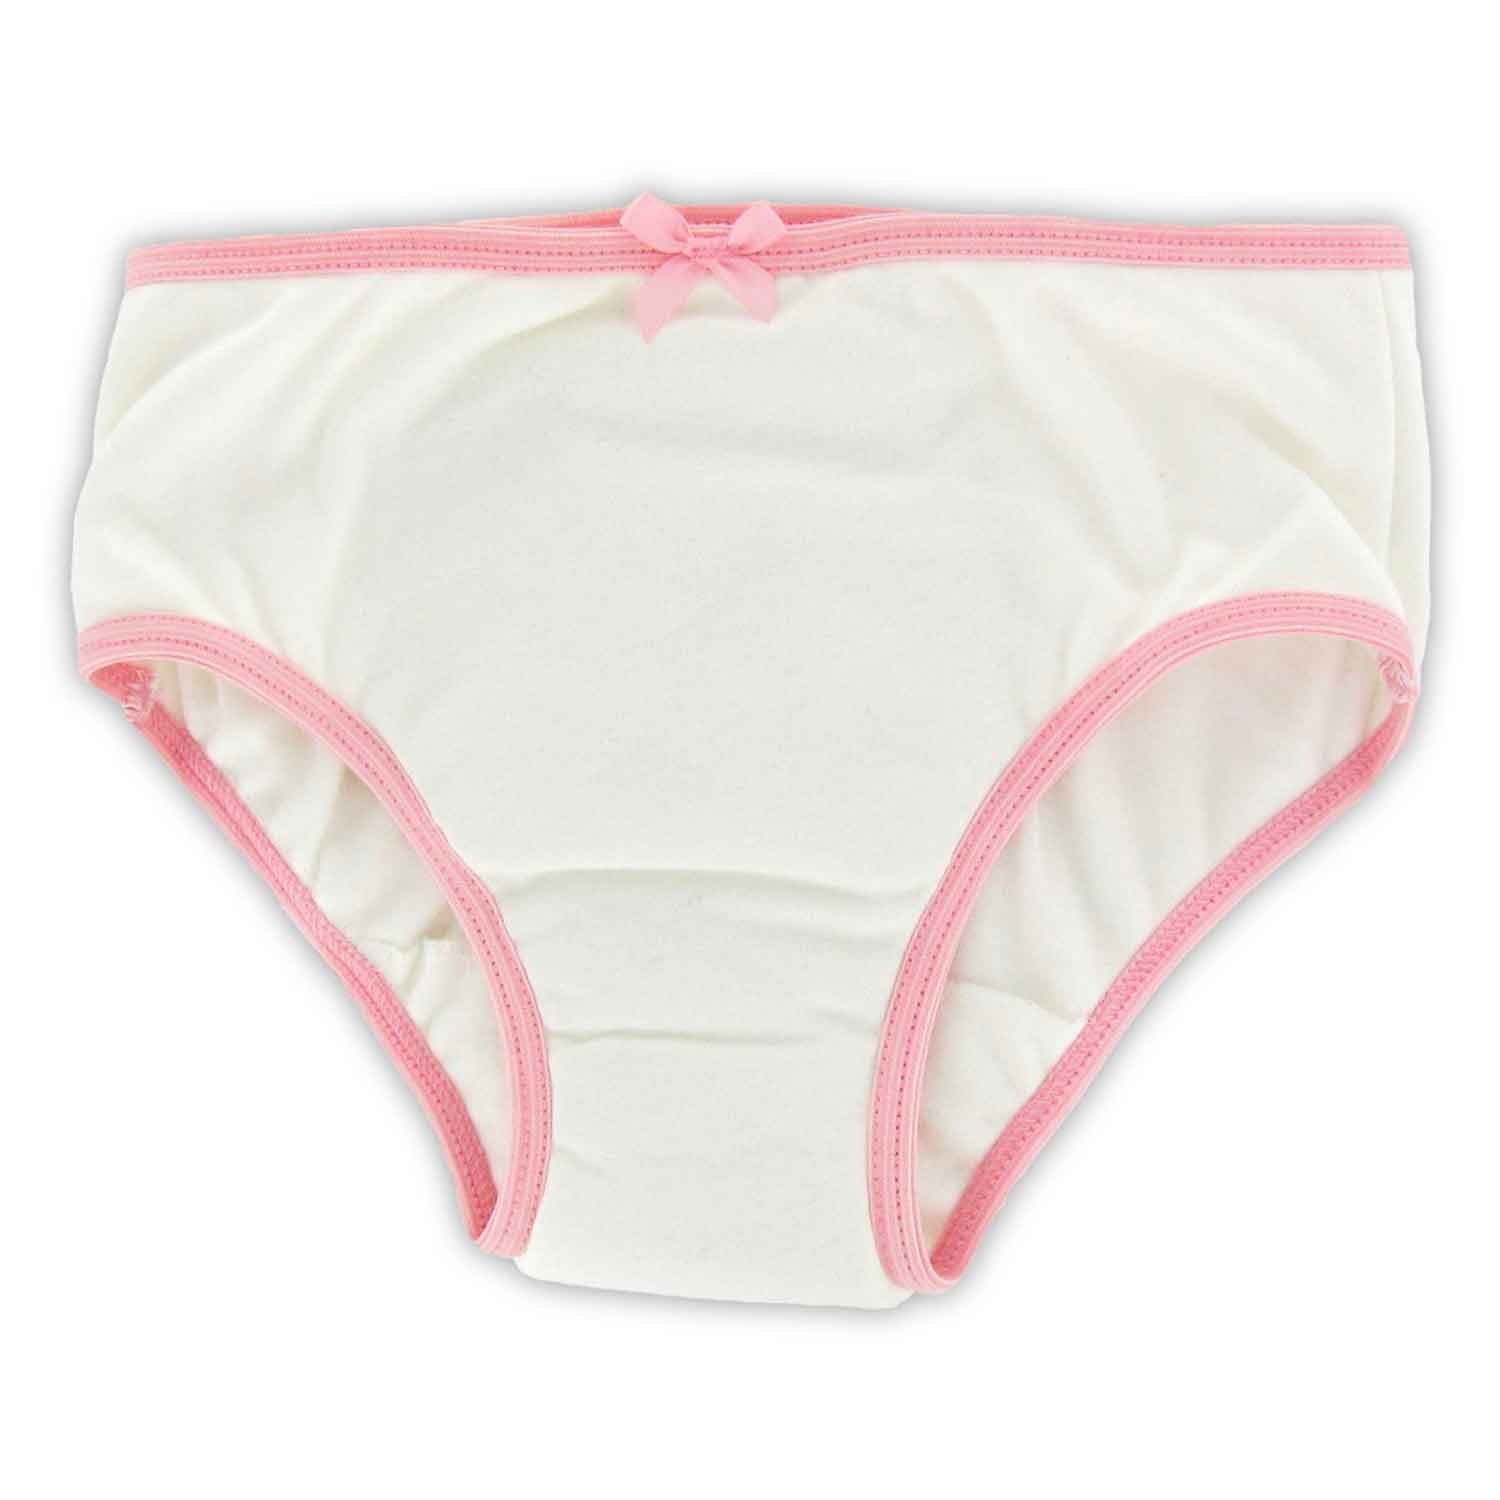 Cardinal Health™ Maximum Absorbency Protective Underwear for Women